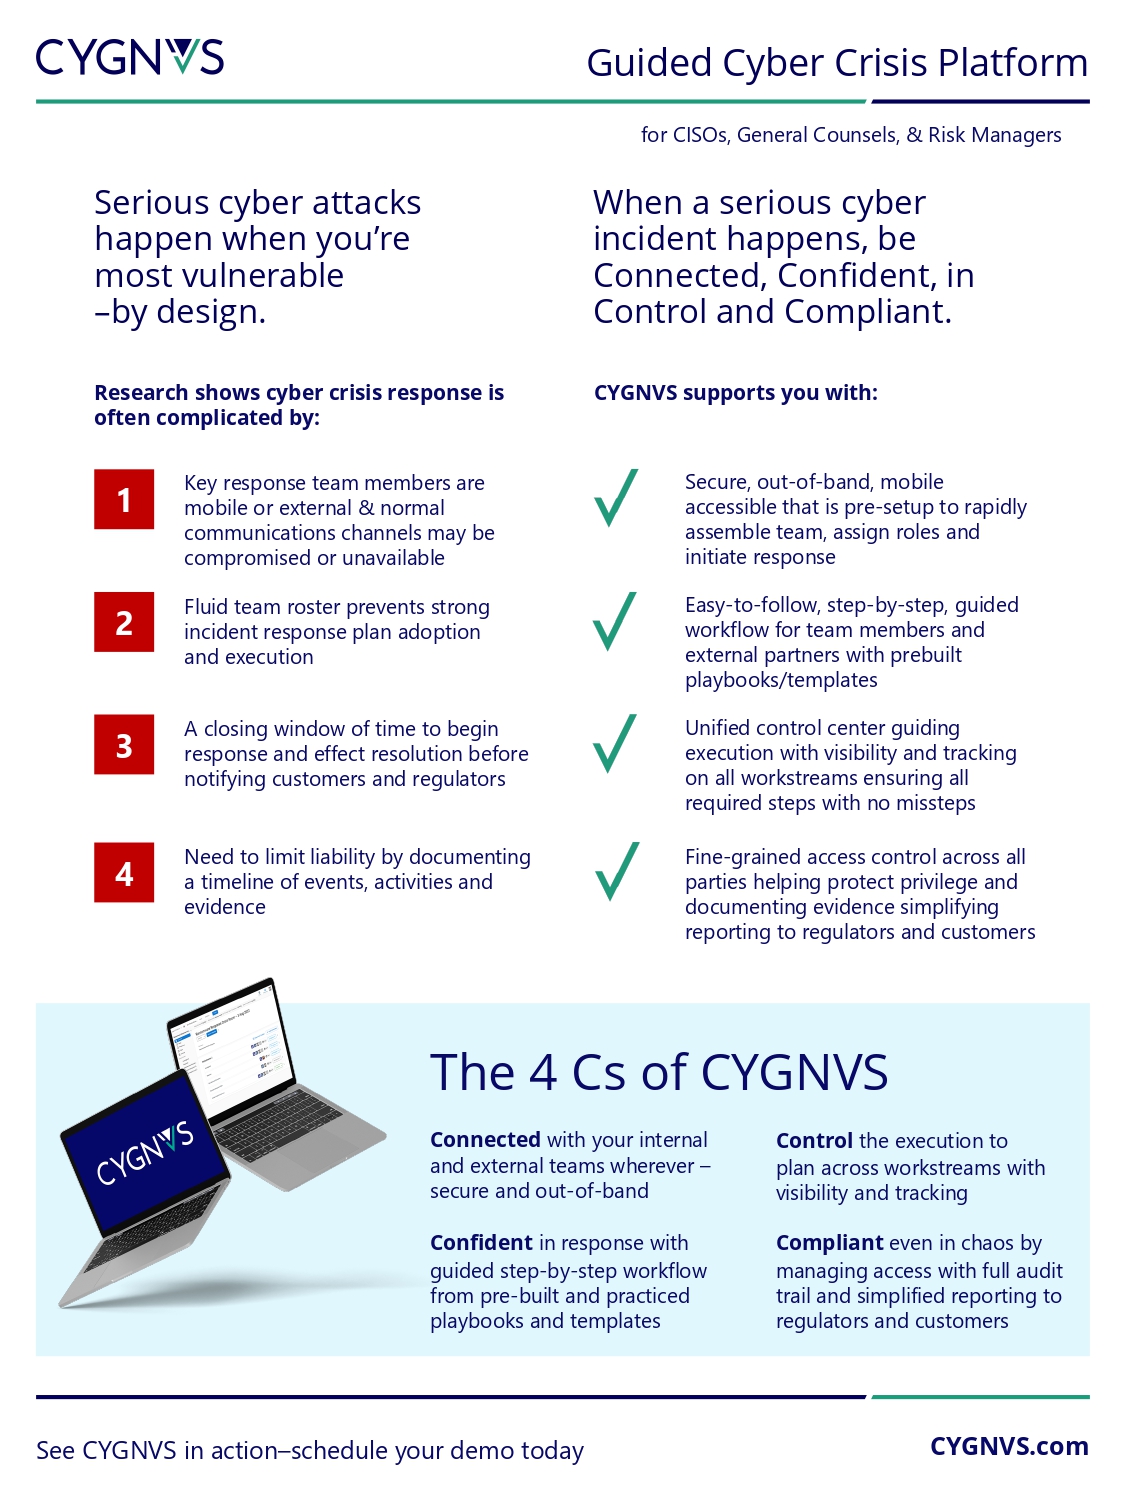 CYGNVS_Brief_FINAL (1)_page-0001